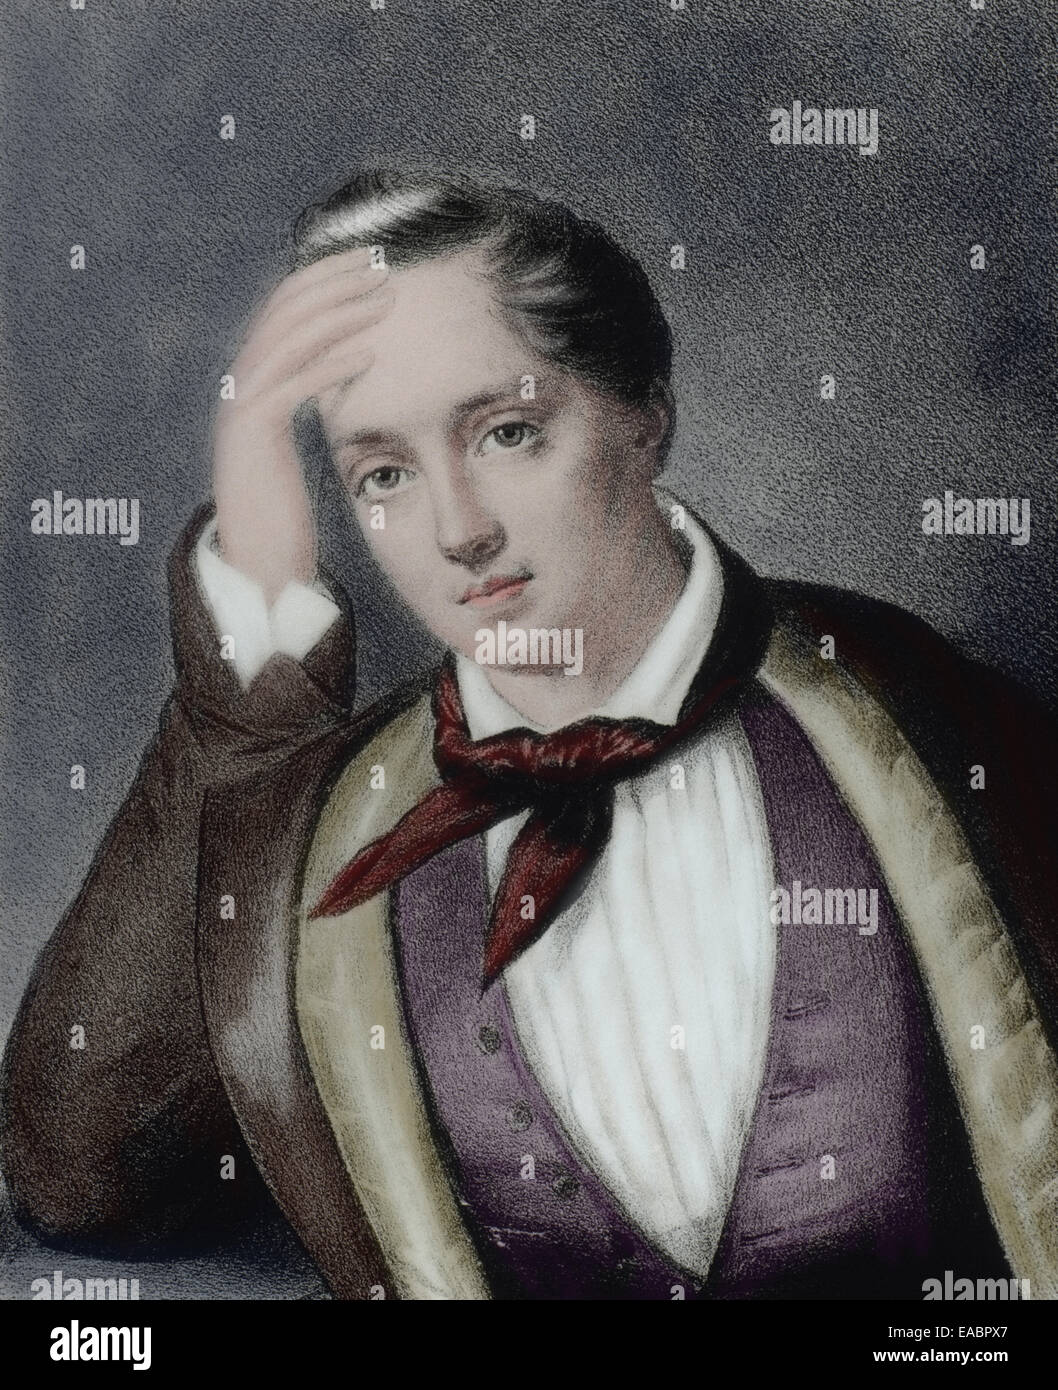 Jewgeni Baratynsky (1800-1844). Russischer Dichter. Romantik-Stil. Porträt. Gravur. Farbige. Stockfoto